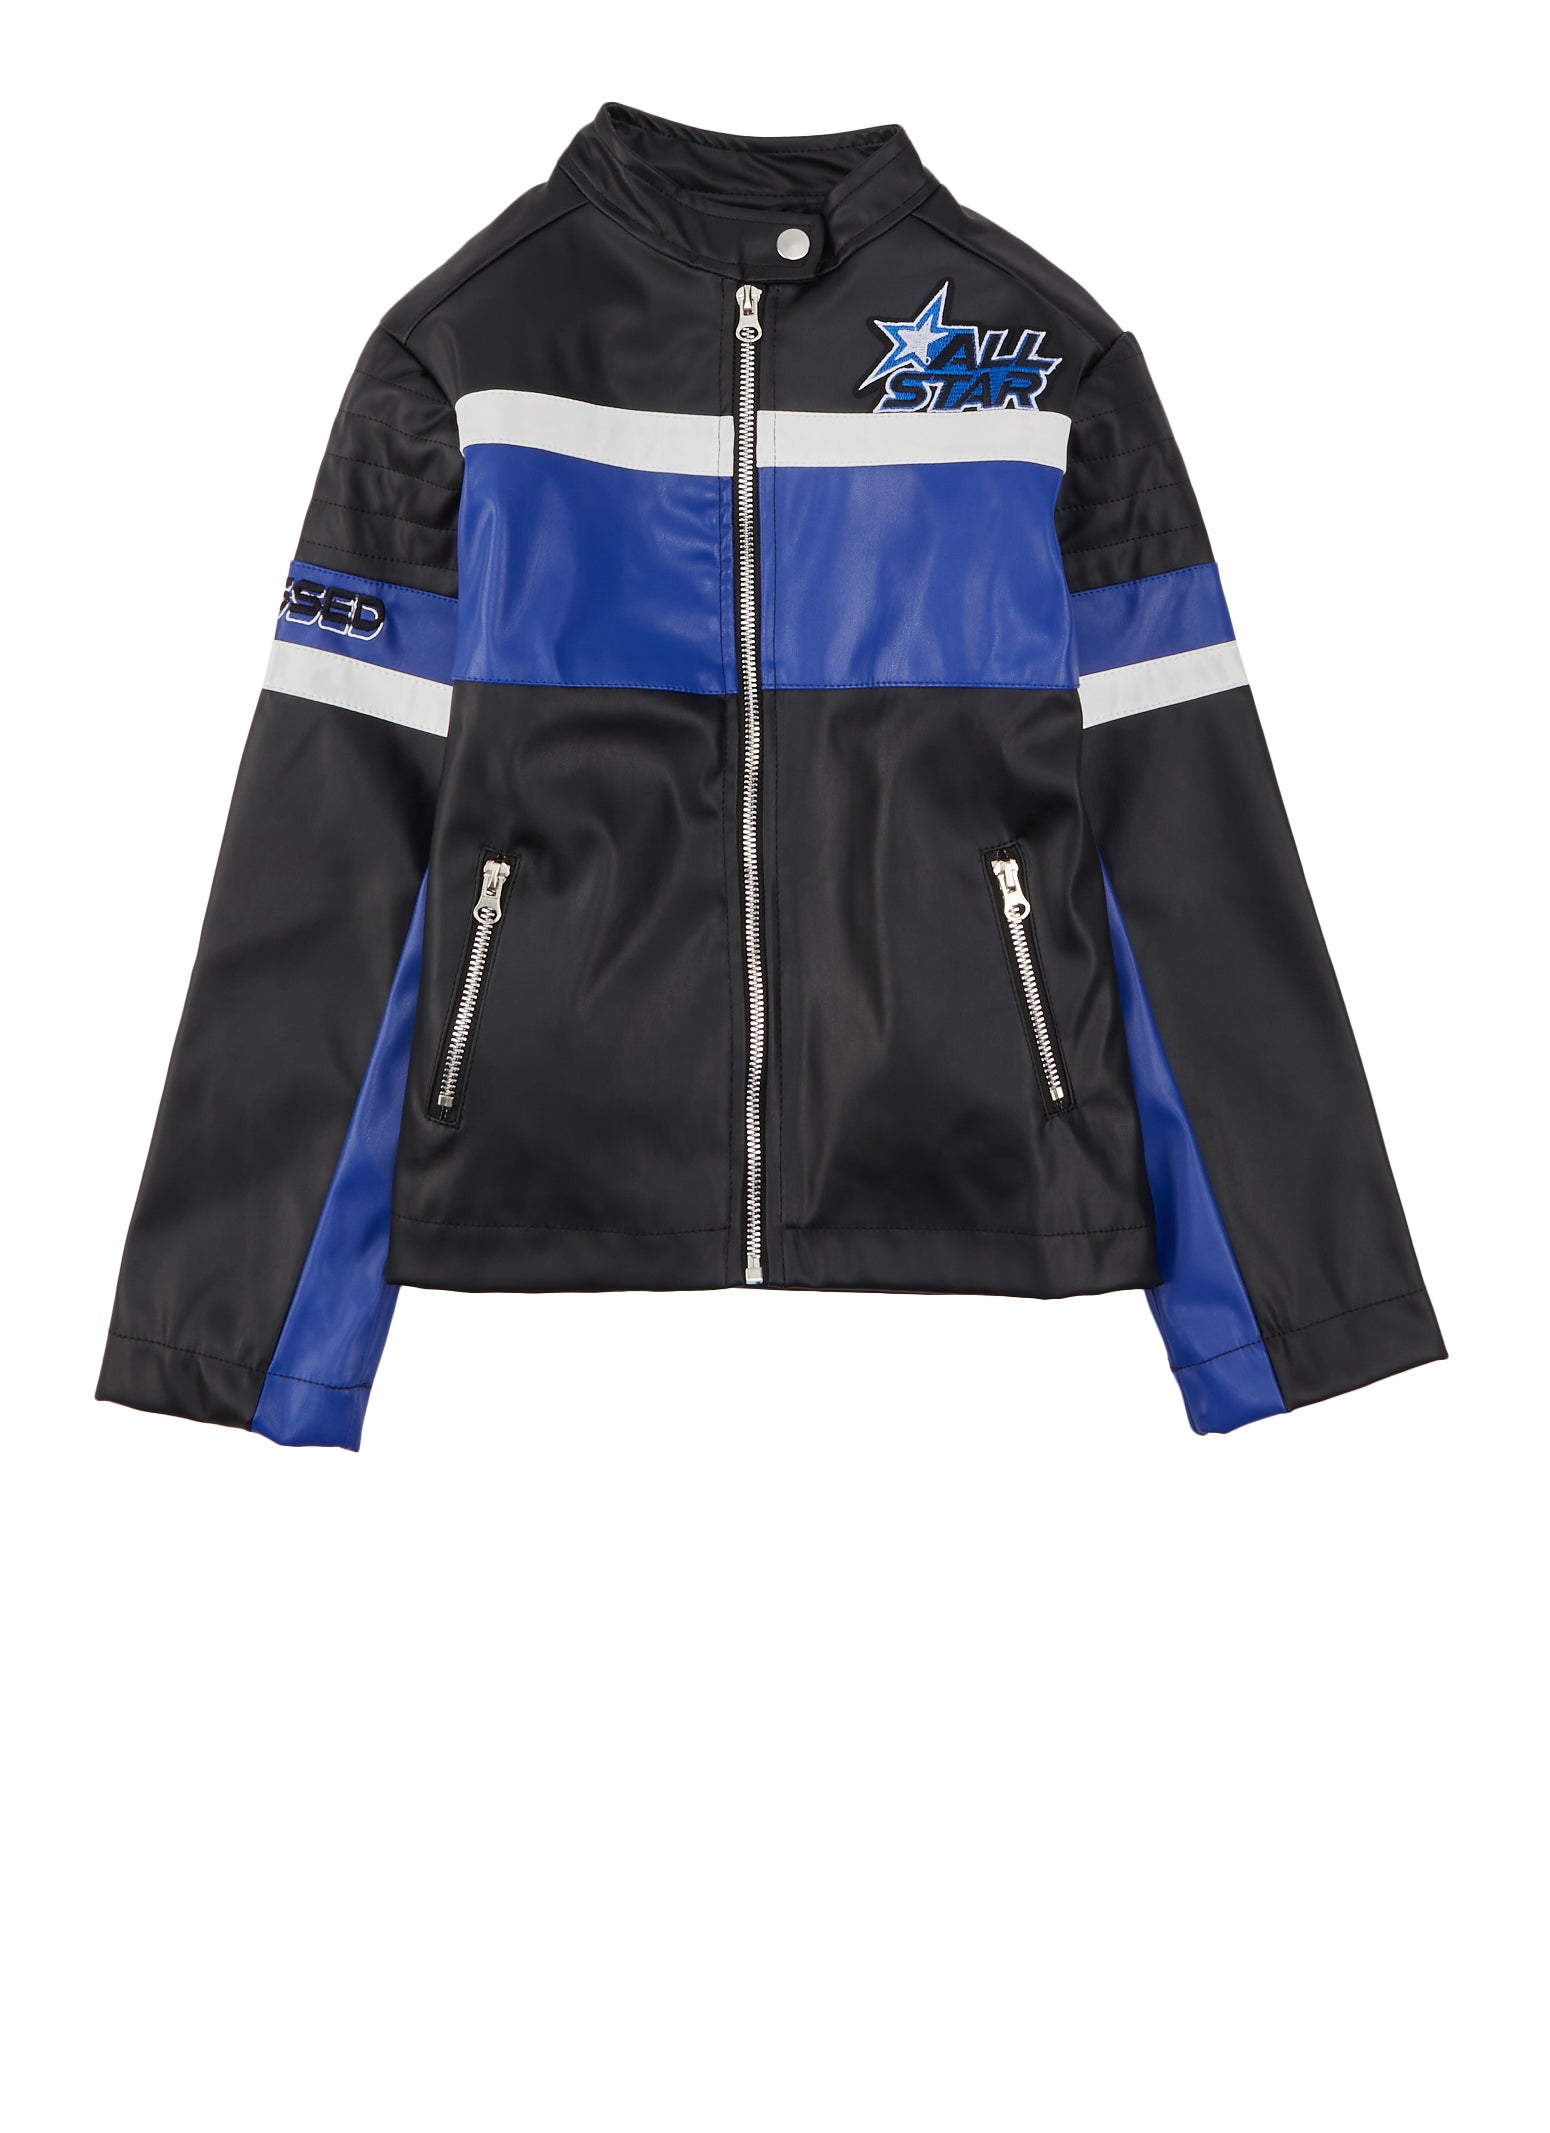 Girls Color Block All Star Moto Jacket, Blue, Size 10-12